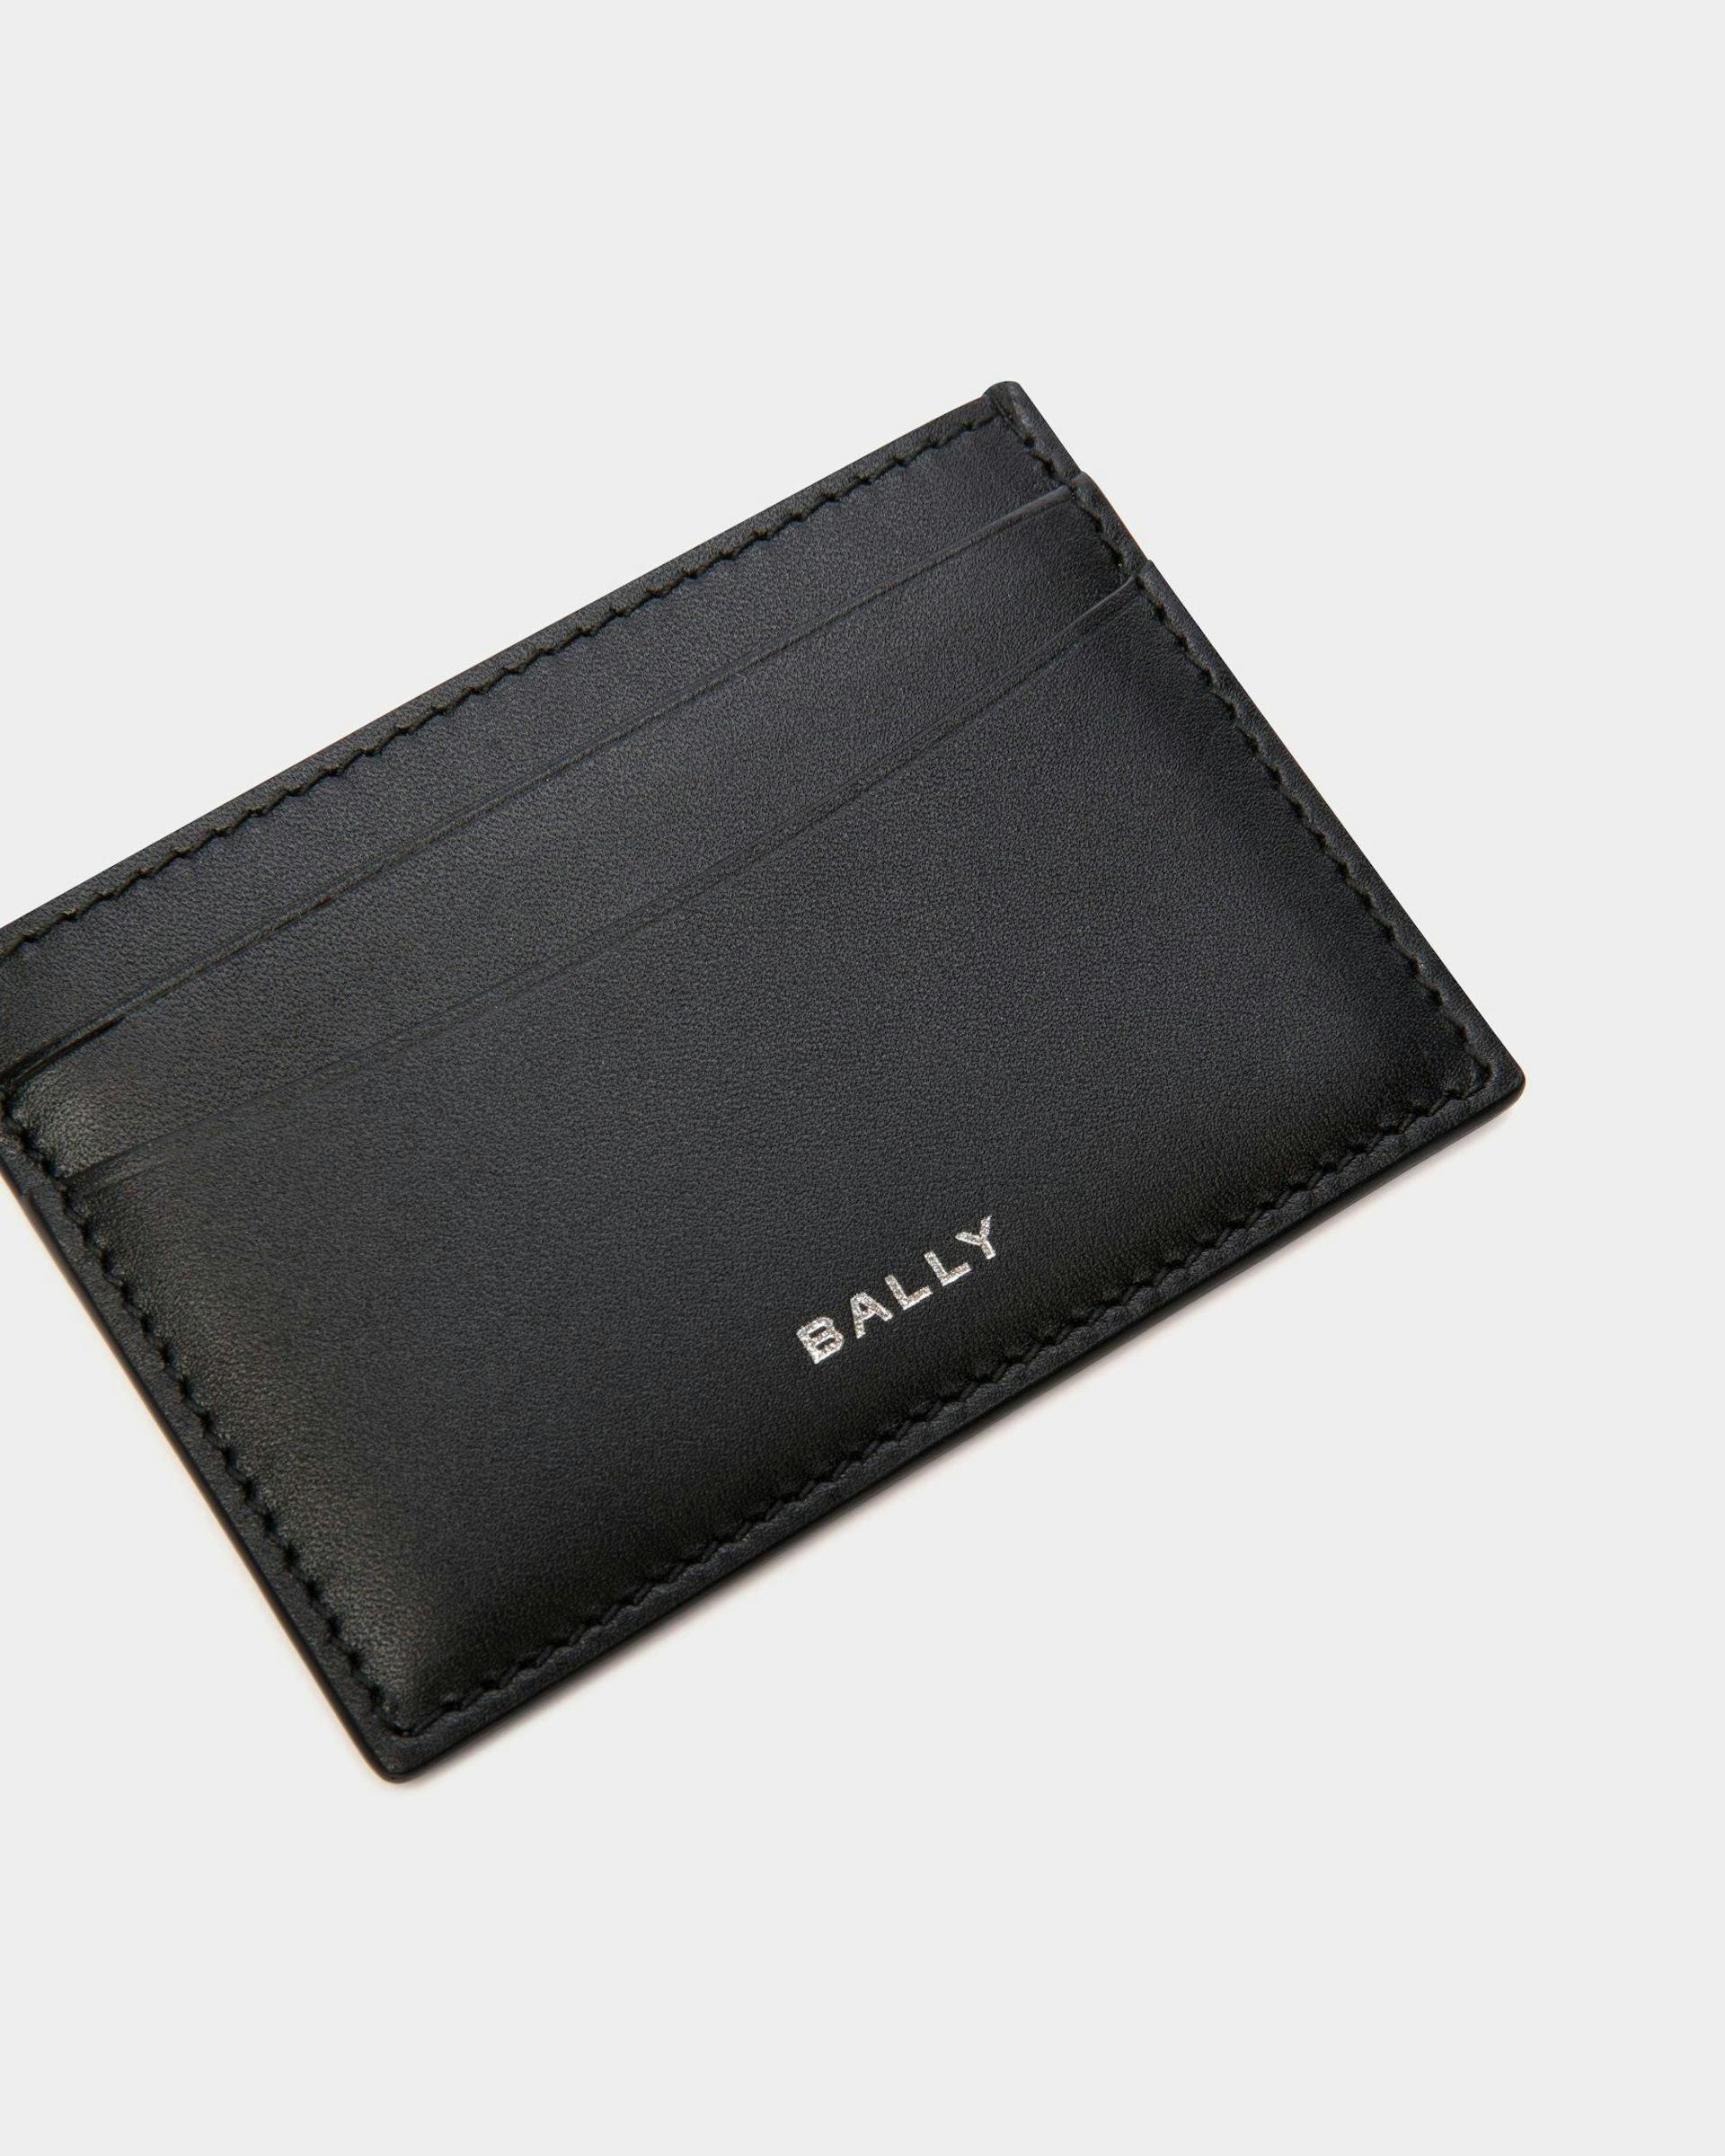 Men's Busy Bally Card Holder in Black Leather | Bally | Still Life Detail